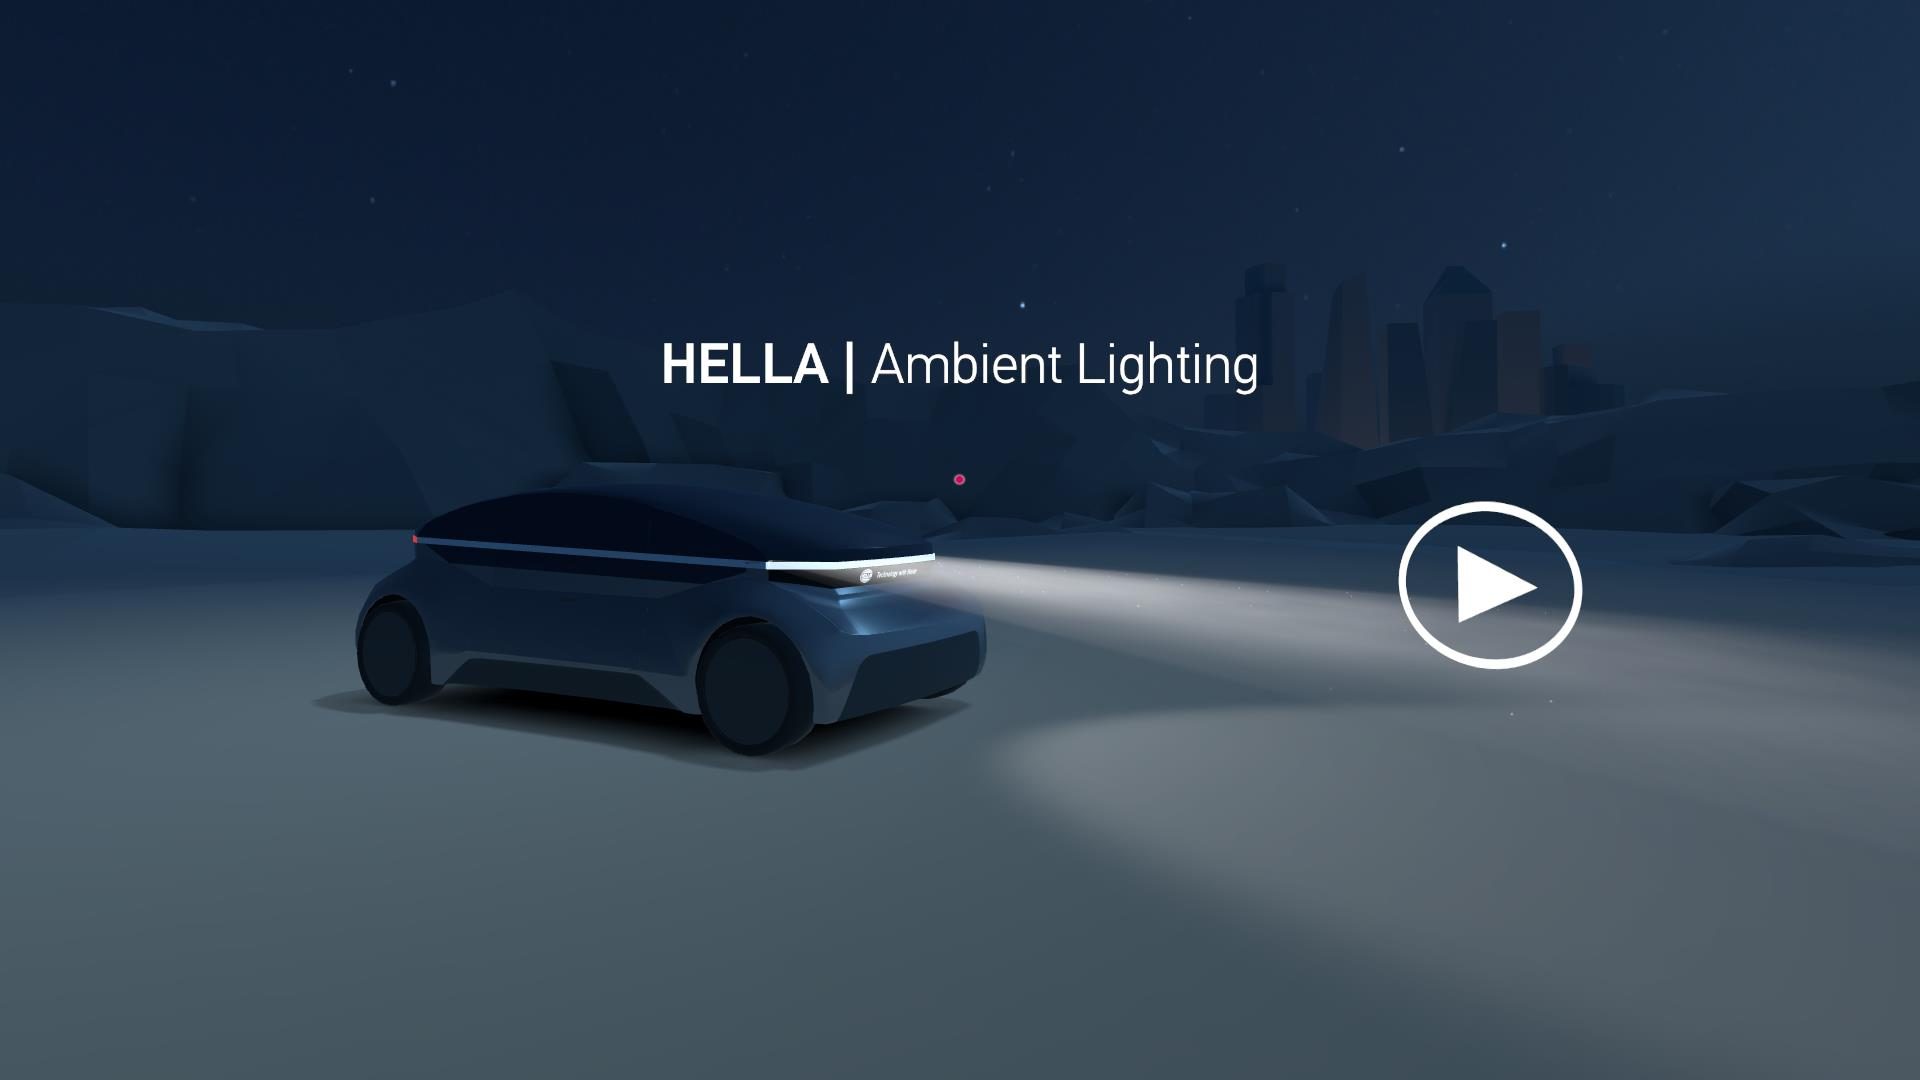 HELLA - Ambient Lightning Simulation in VR